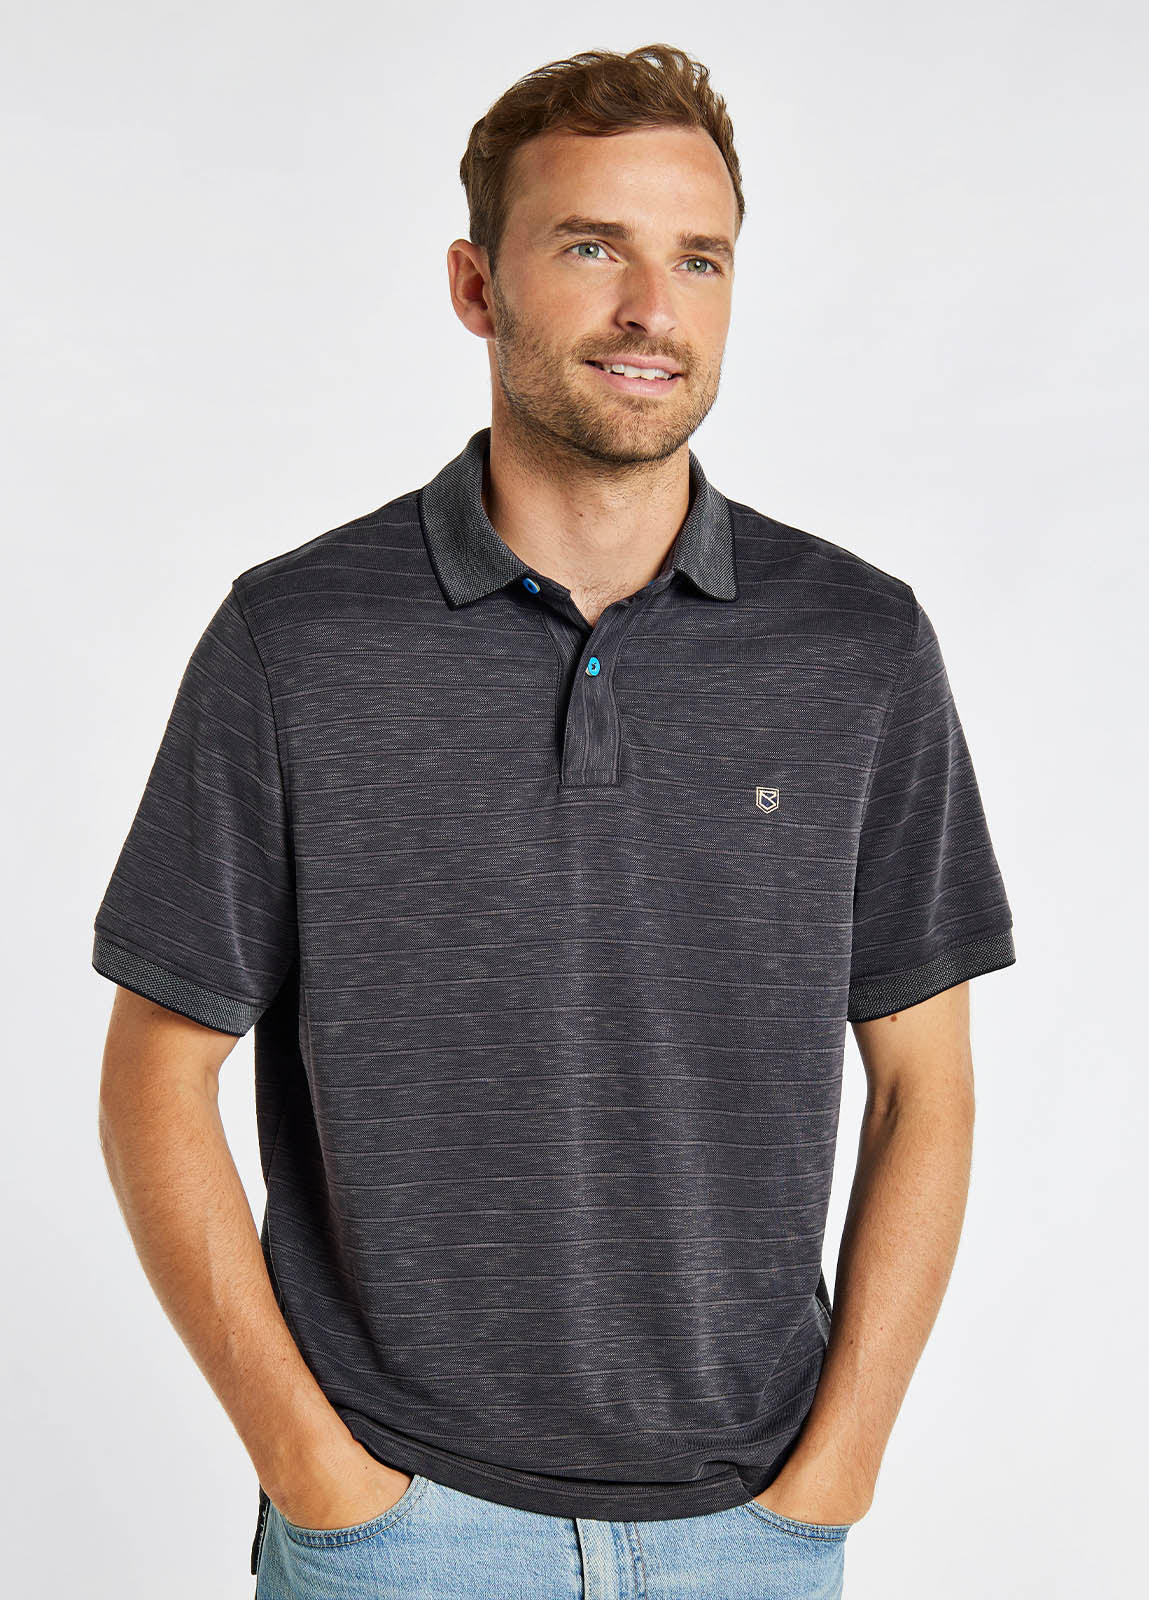 Dubarry Moorings Polo Shirt - Graphite